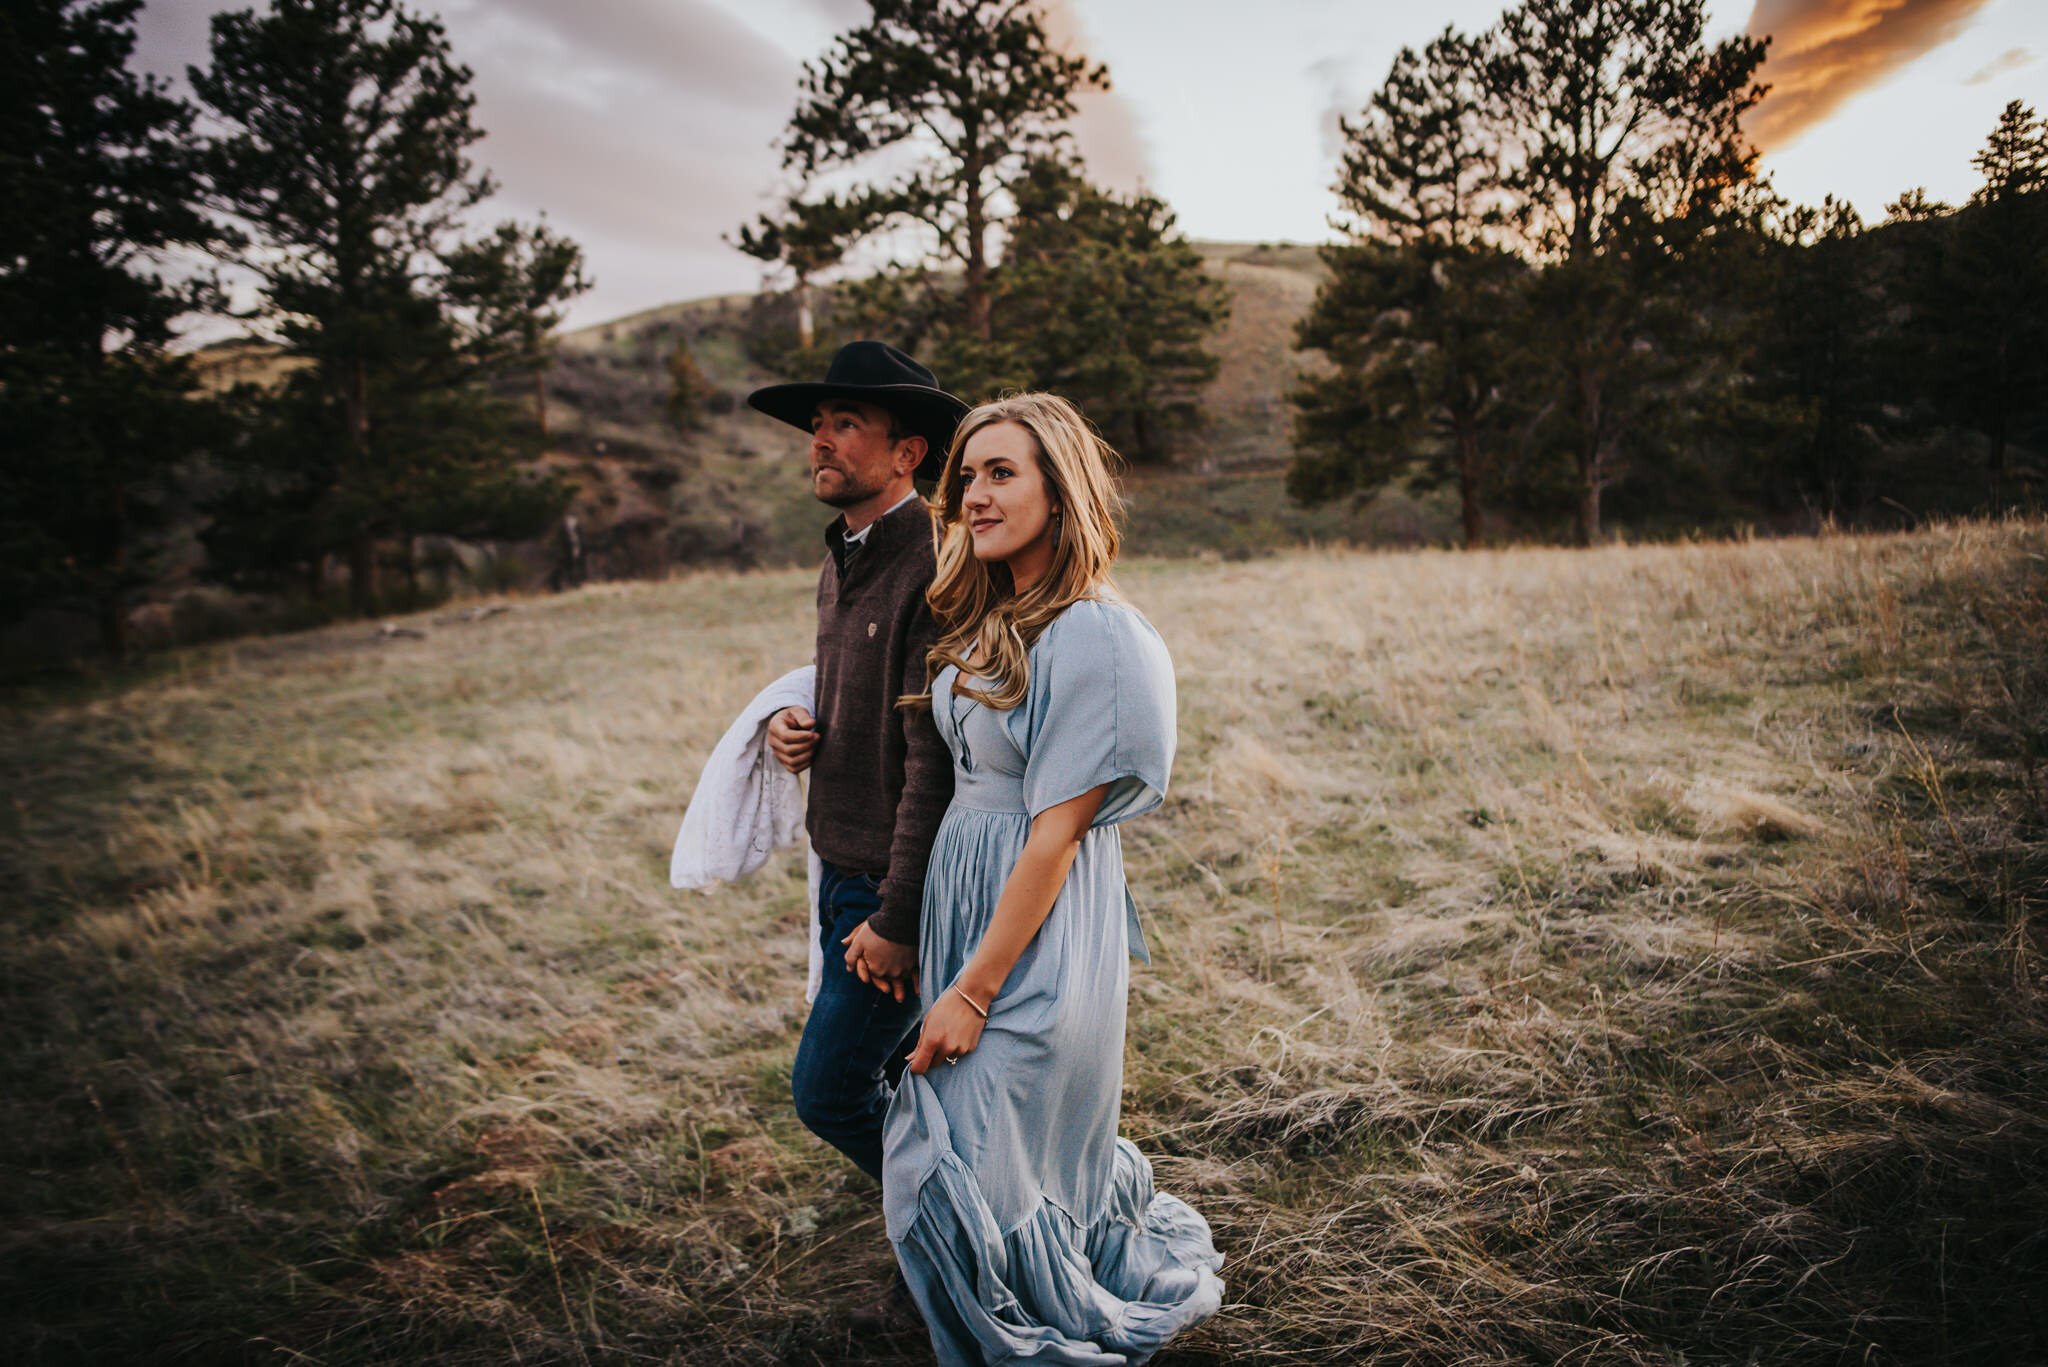 Shelby+and+Brady+Engagement+Session+Cheyenne+Wyoming+Sunset+Water+Fields+Rocks+Nature+Colorado+Photographer+Wild+Prairie+Photography-37-2020.jpeg